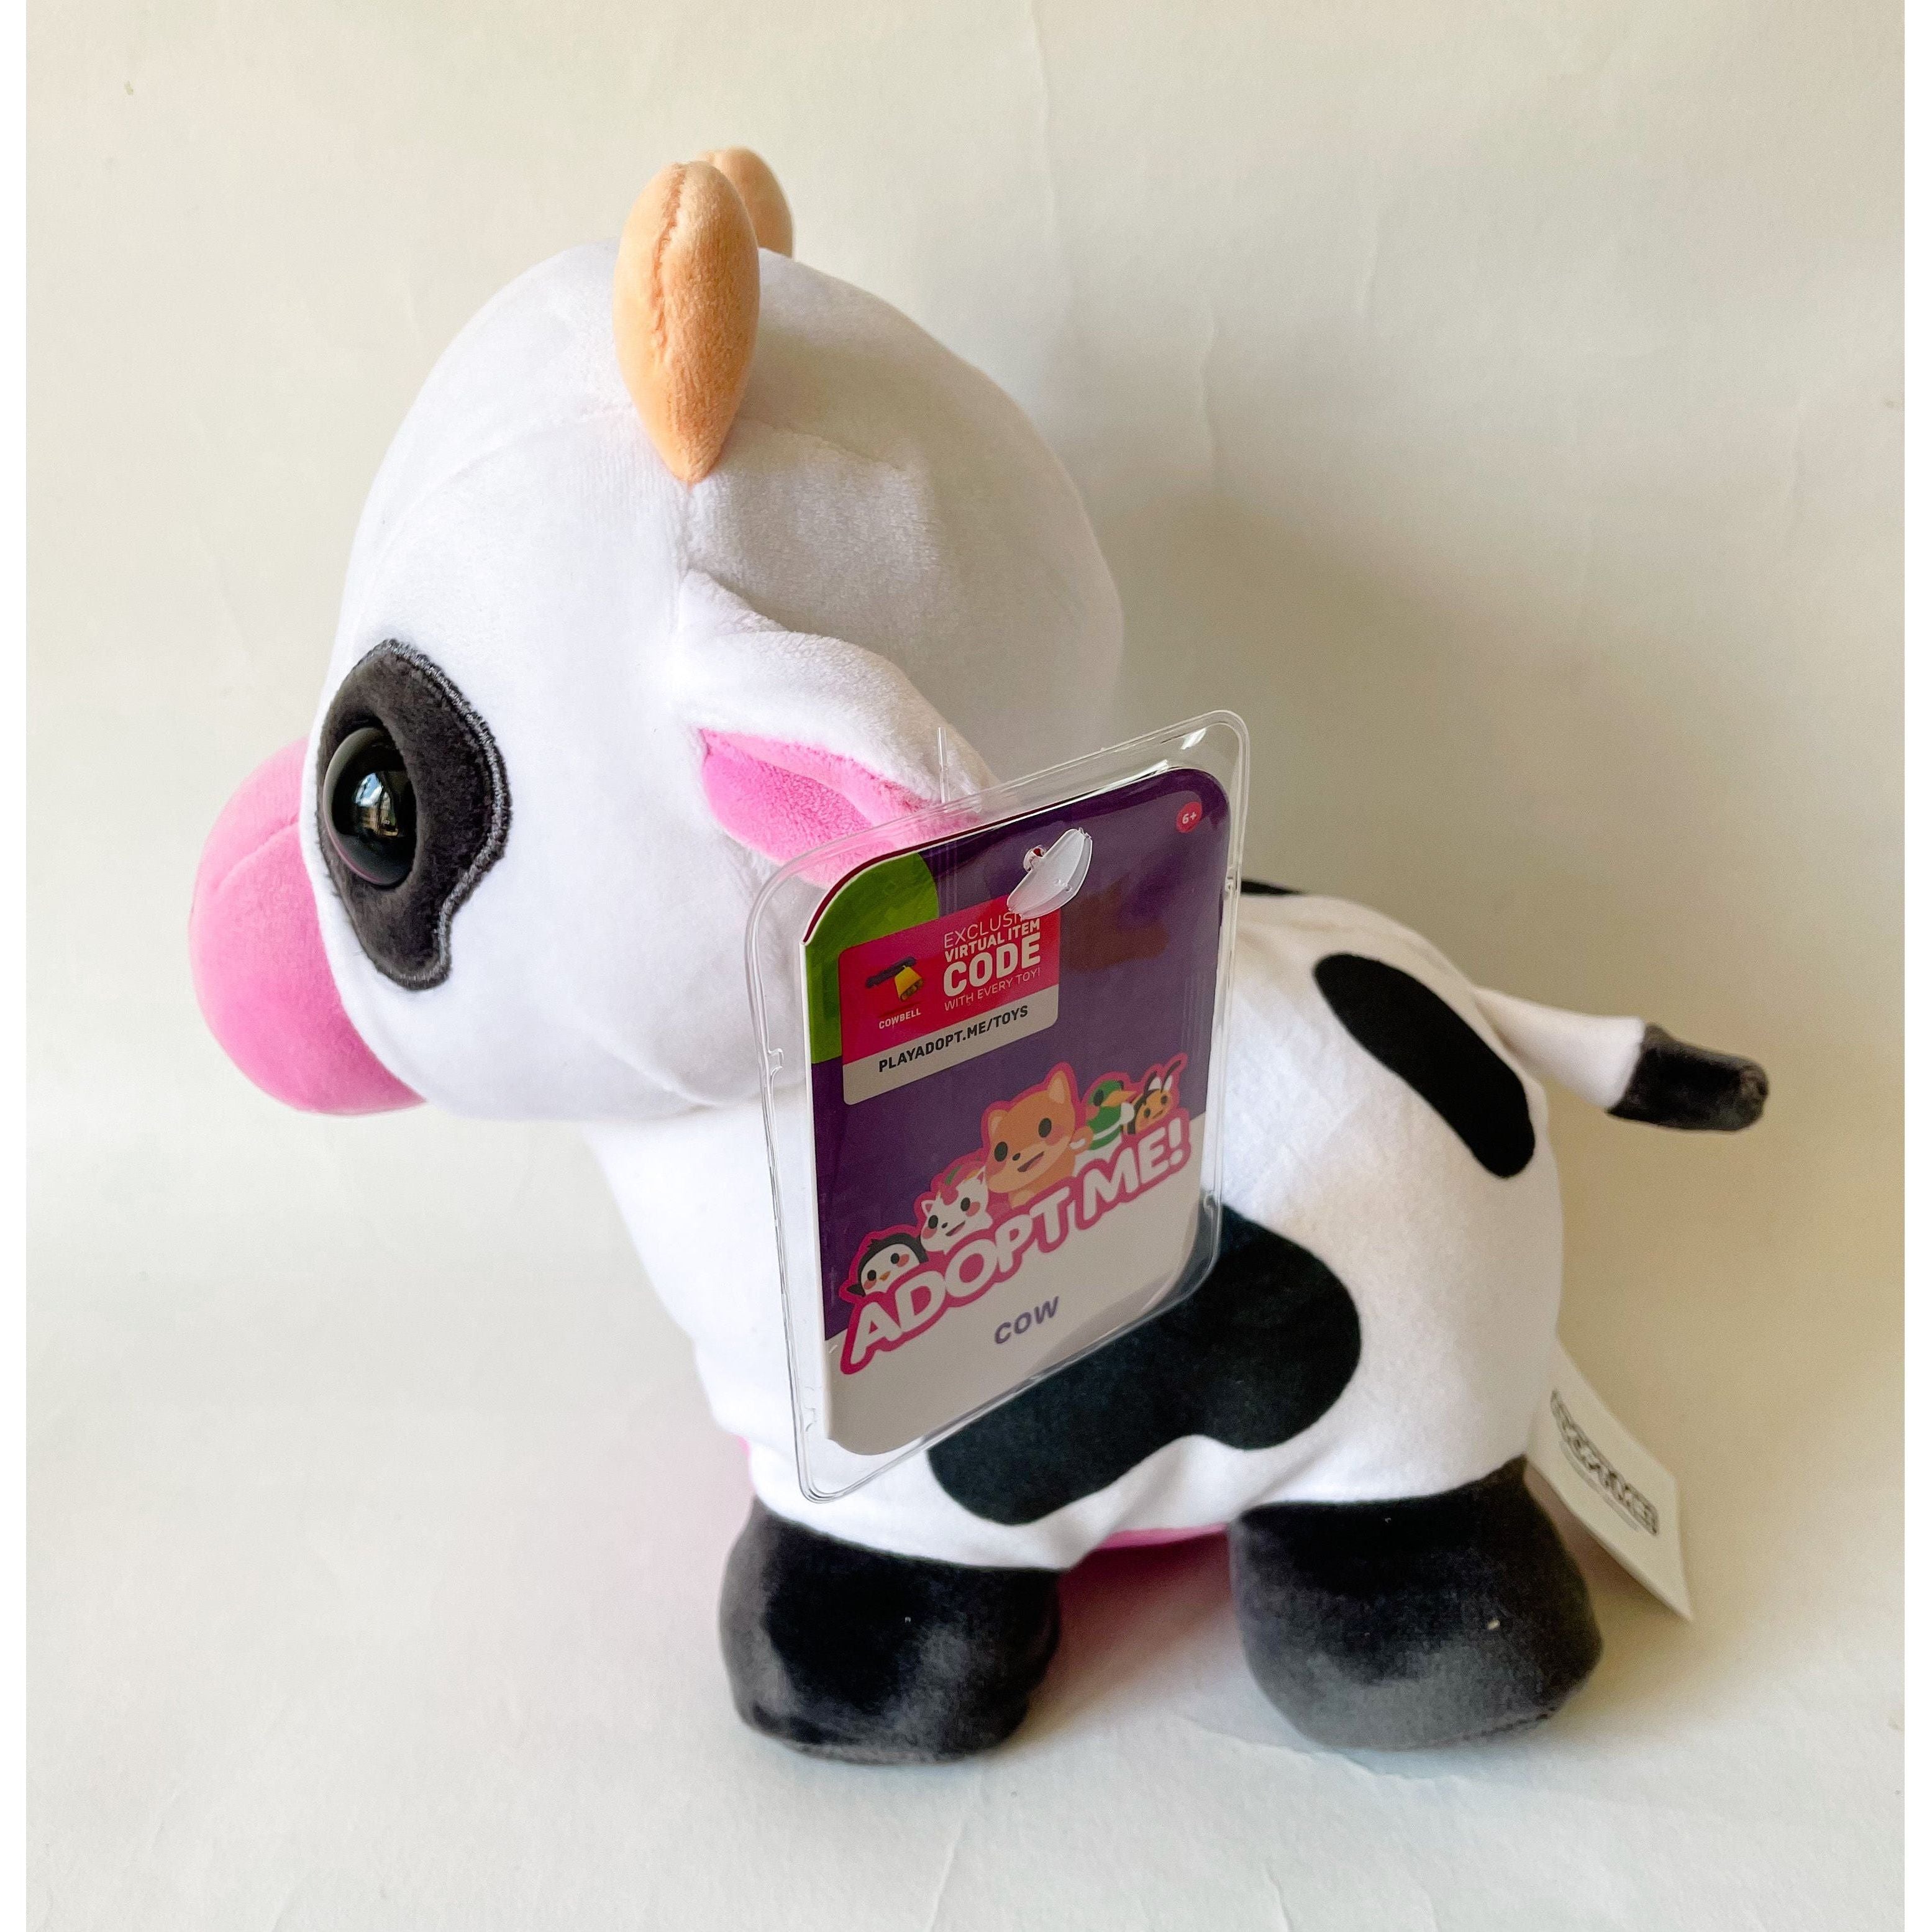 Adopt Me! 8 Collector Plush Pet Cow, Stuffed Animal Plush Toy , adopt me 